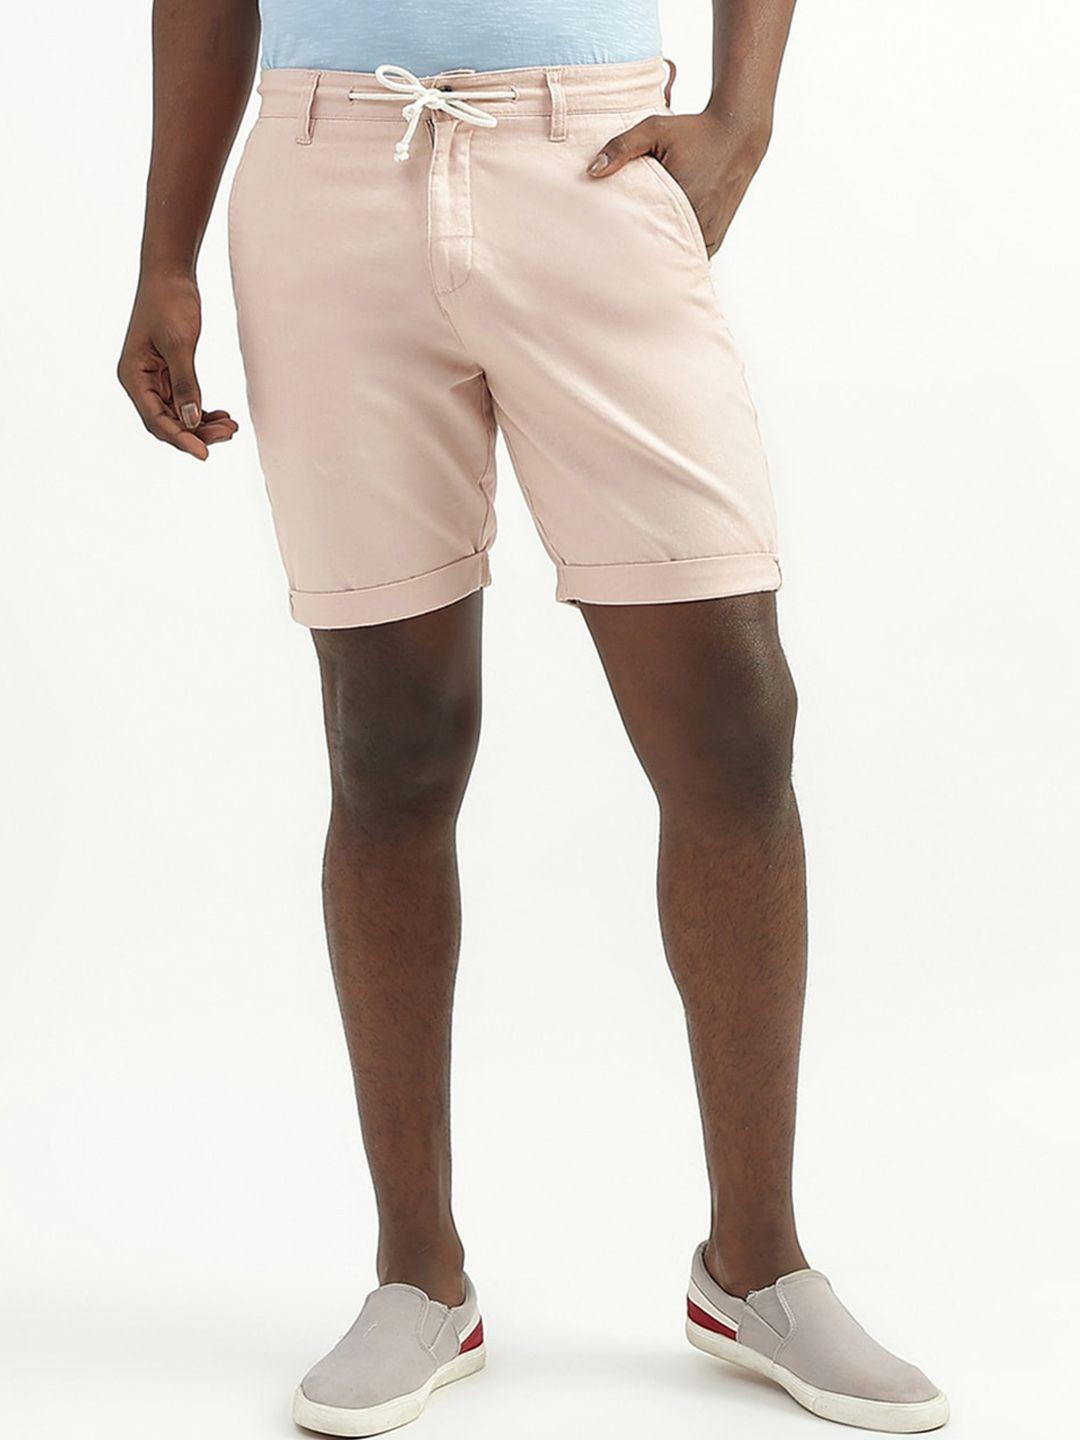 united-colors-of-benetton-men-cotton-mid-rise-regular-fit-shorts